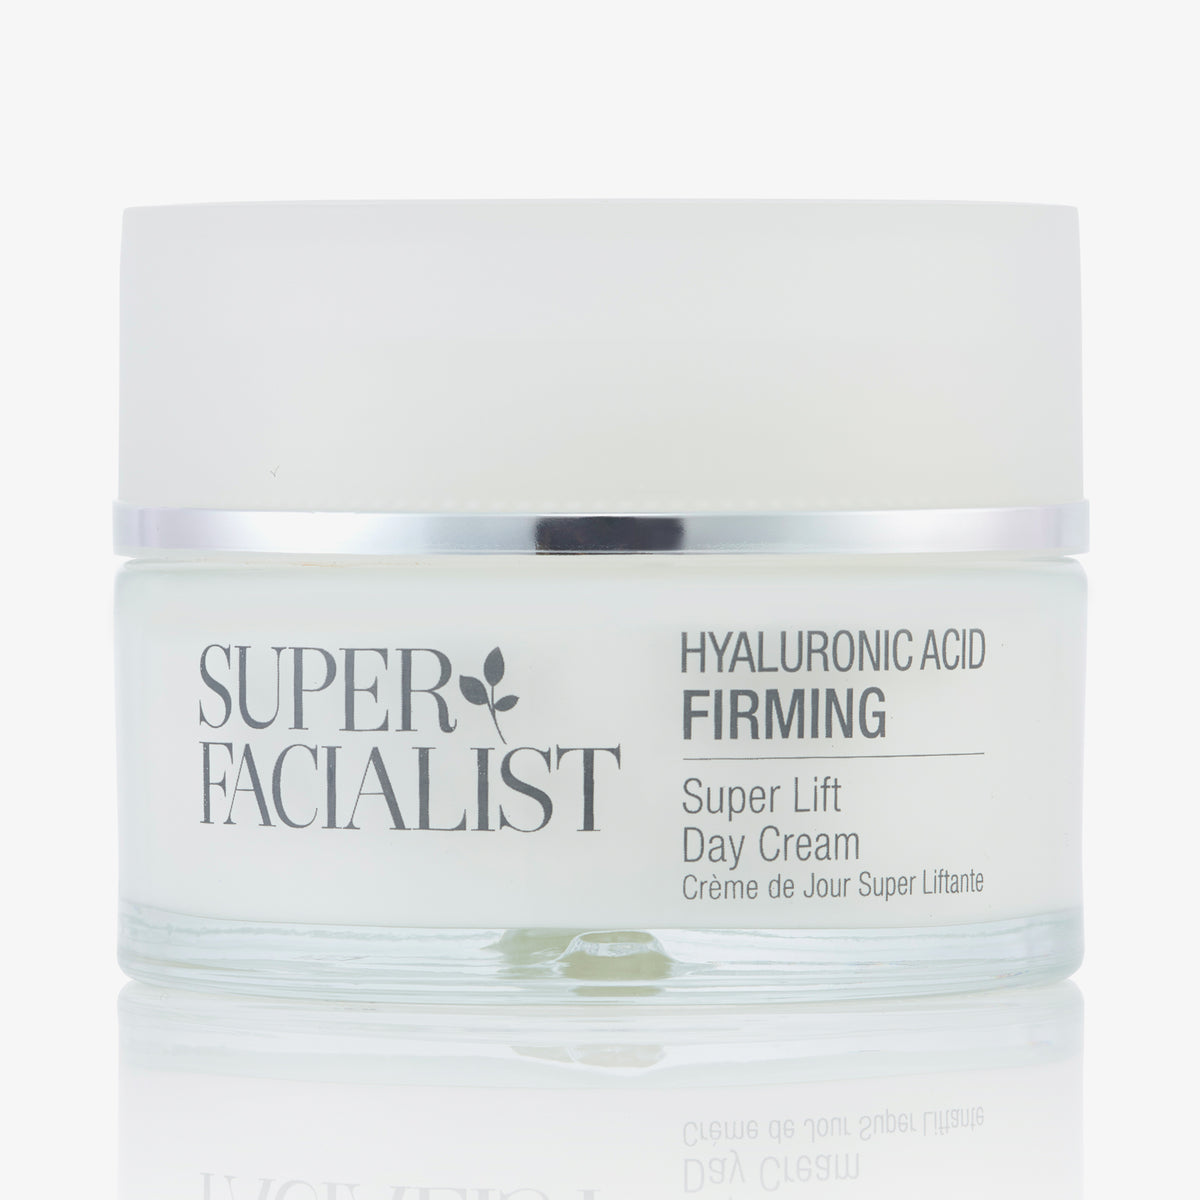 Super Facialist | Hyaluronic Acid Firming Super Lift Day Cream